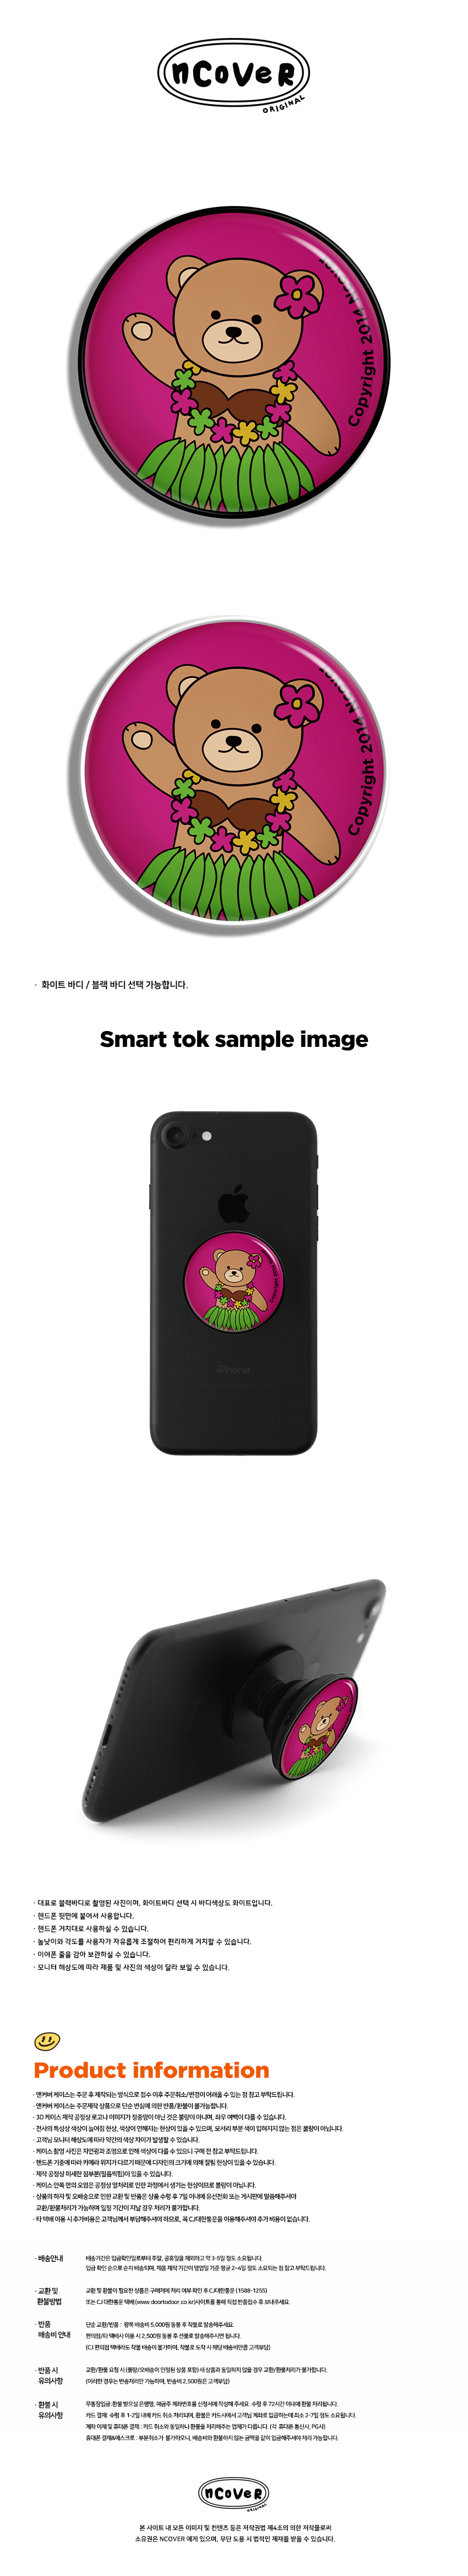  Aloha bruin(blow-up)-pink(smart tok)  10,000원 - 바이인터내셔널주식회사 디지털, 모바일 액세서리, 거치대/홀더, 스마트톡/스마트링 바보사랑  Aloha bruin(blow-up)-pink(smart tok)  10,000원 - 바이인터내셔널주식회사 디지털, 모바일 액세서리, 거치대/홀더, 스마트톡/스마트링 바보사랑